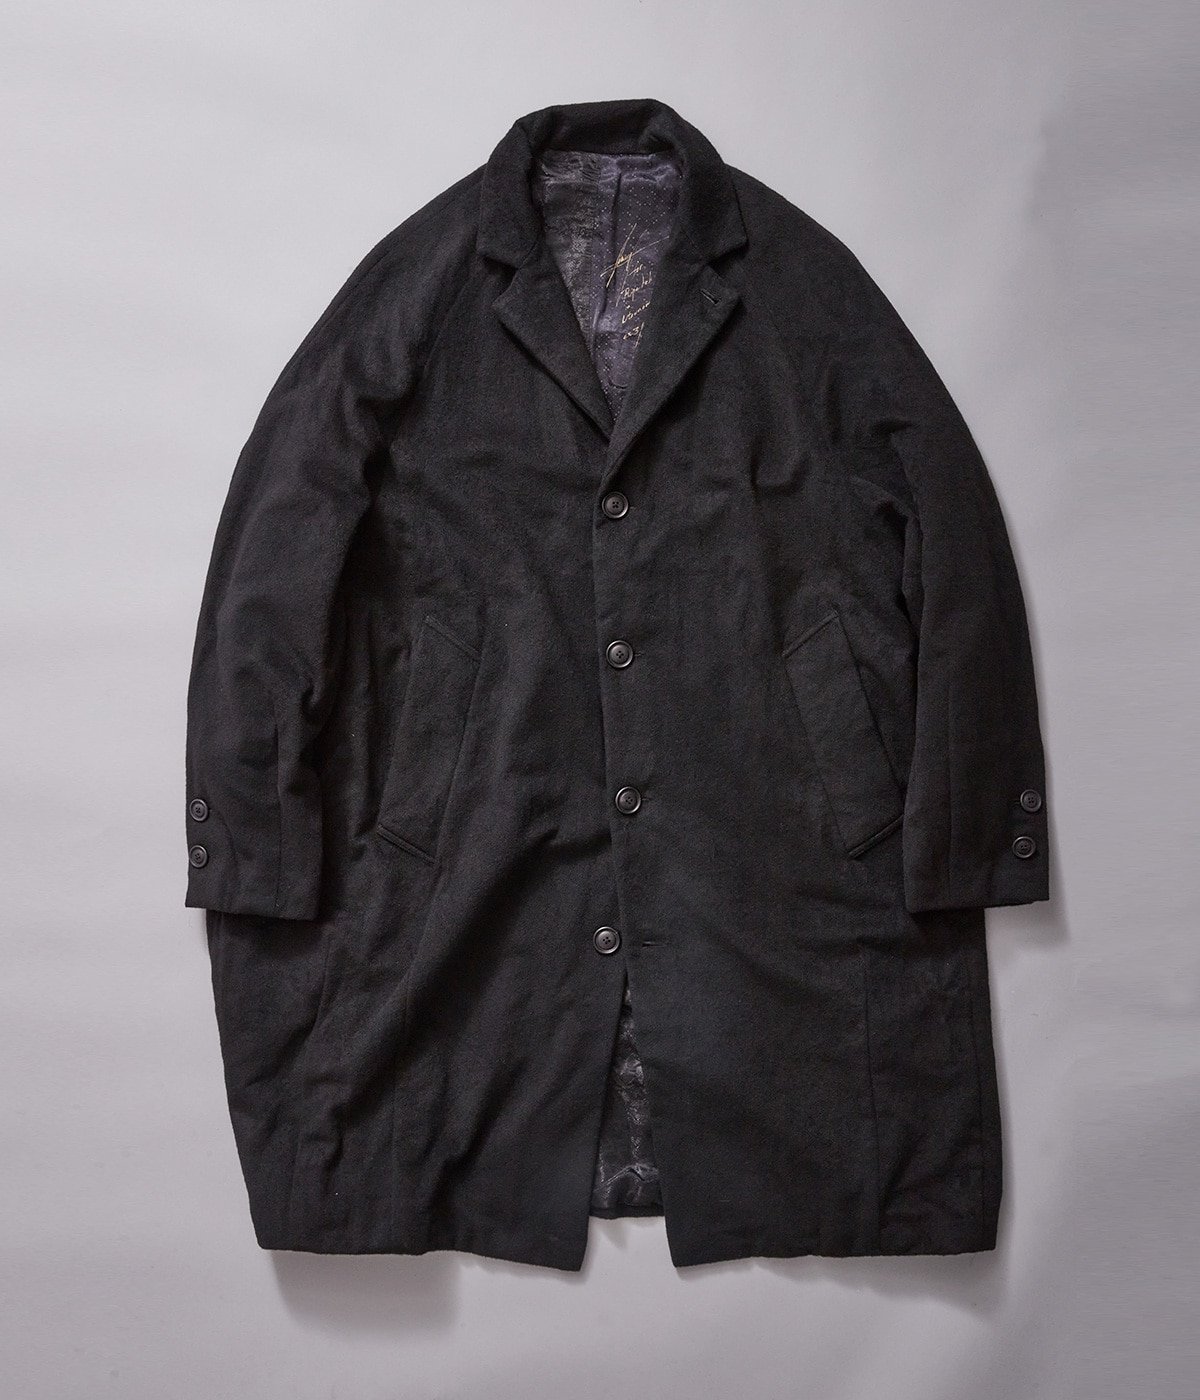 cashmere coat | GEOFFREY B.SMALL(ジェフリー Bスモール) / アウター